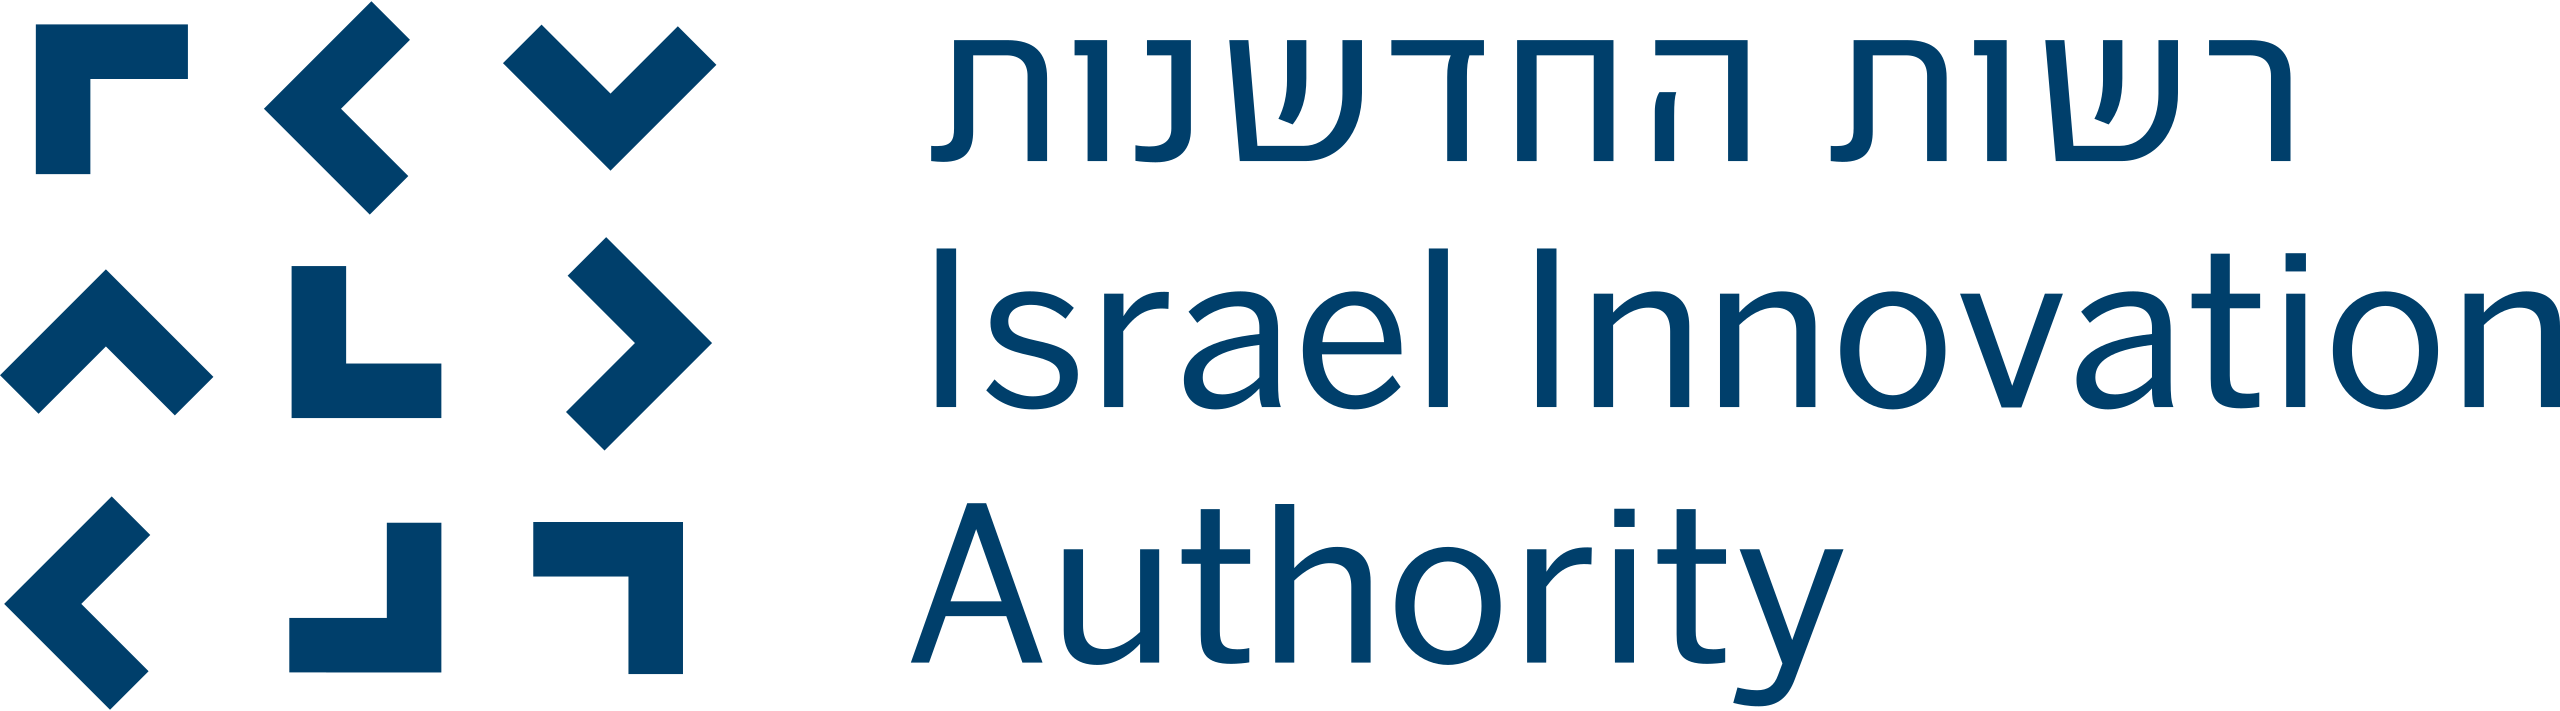 Israel_Innovation_Authority